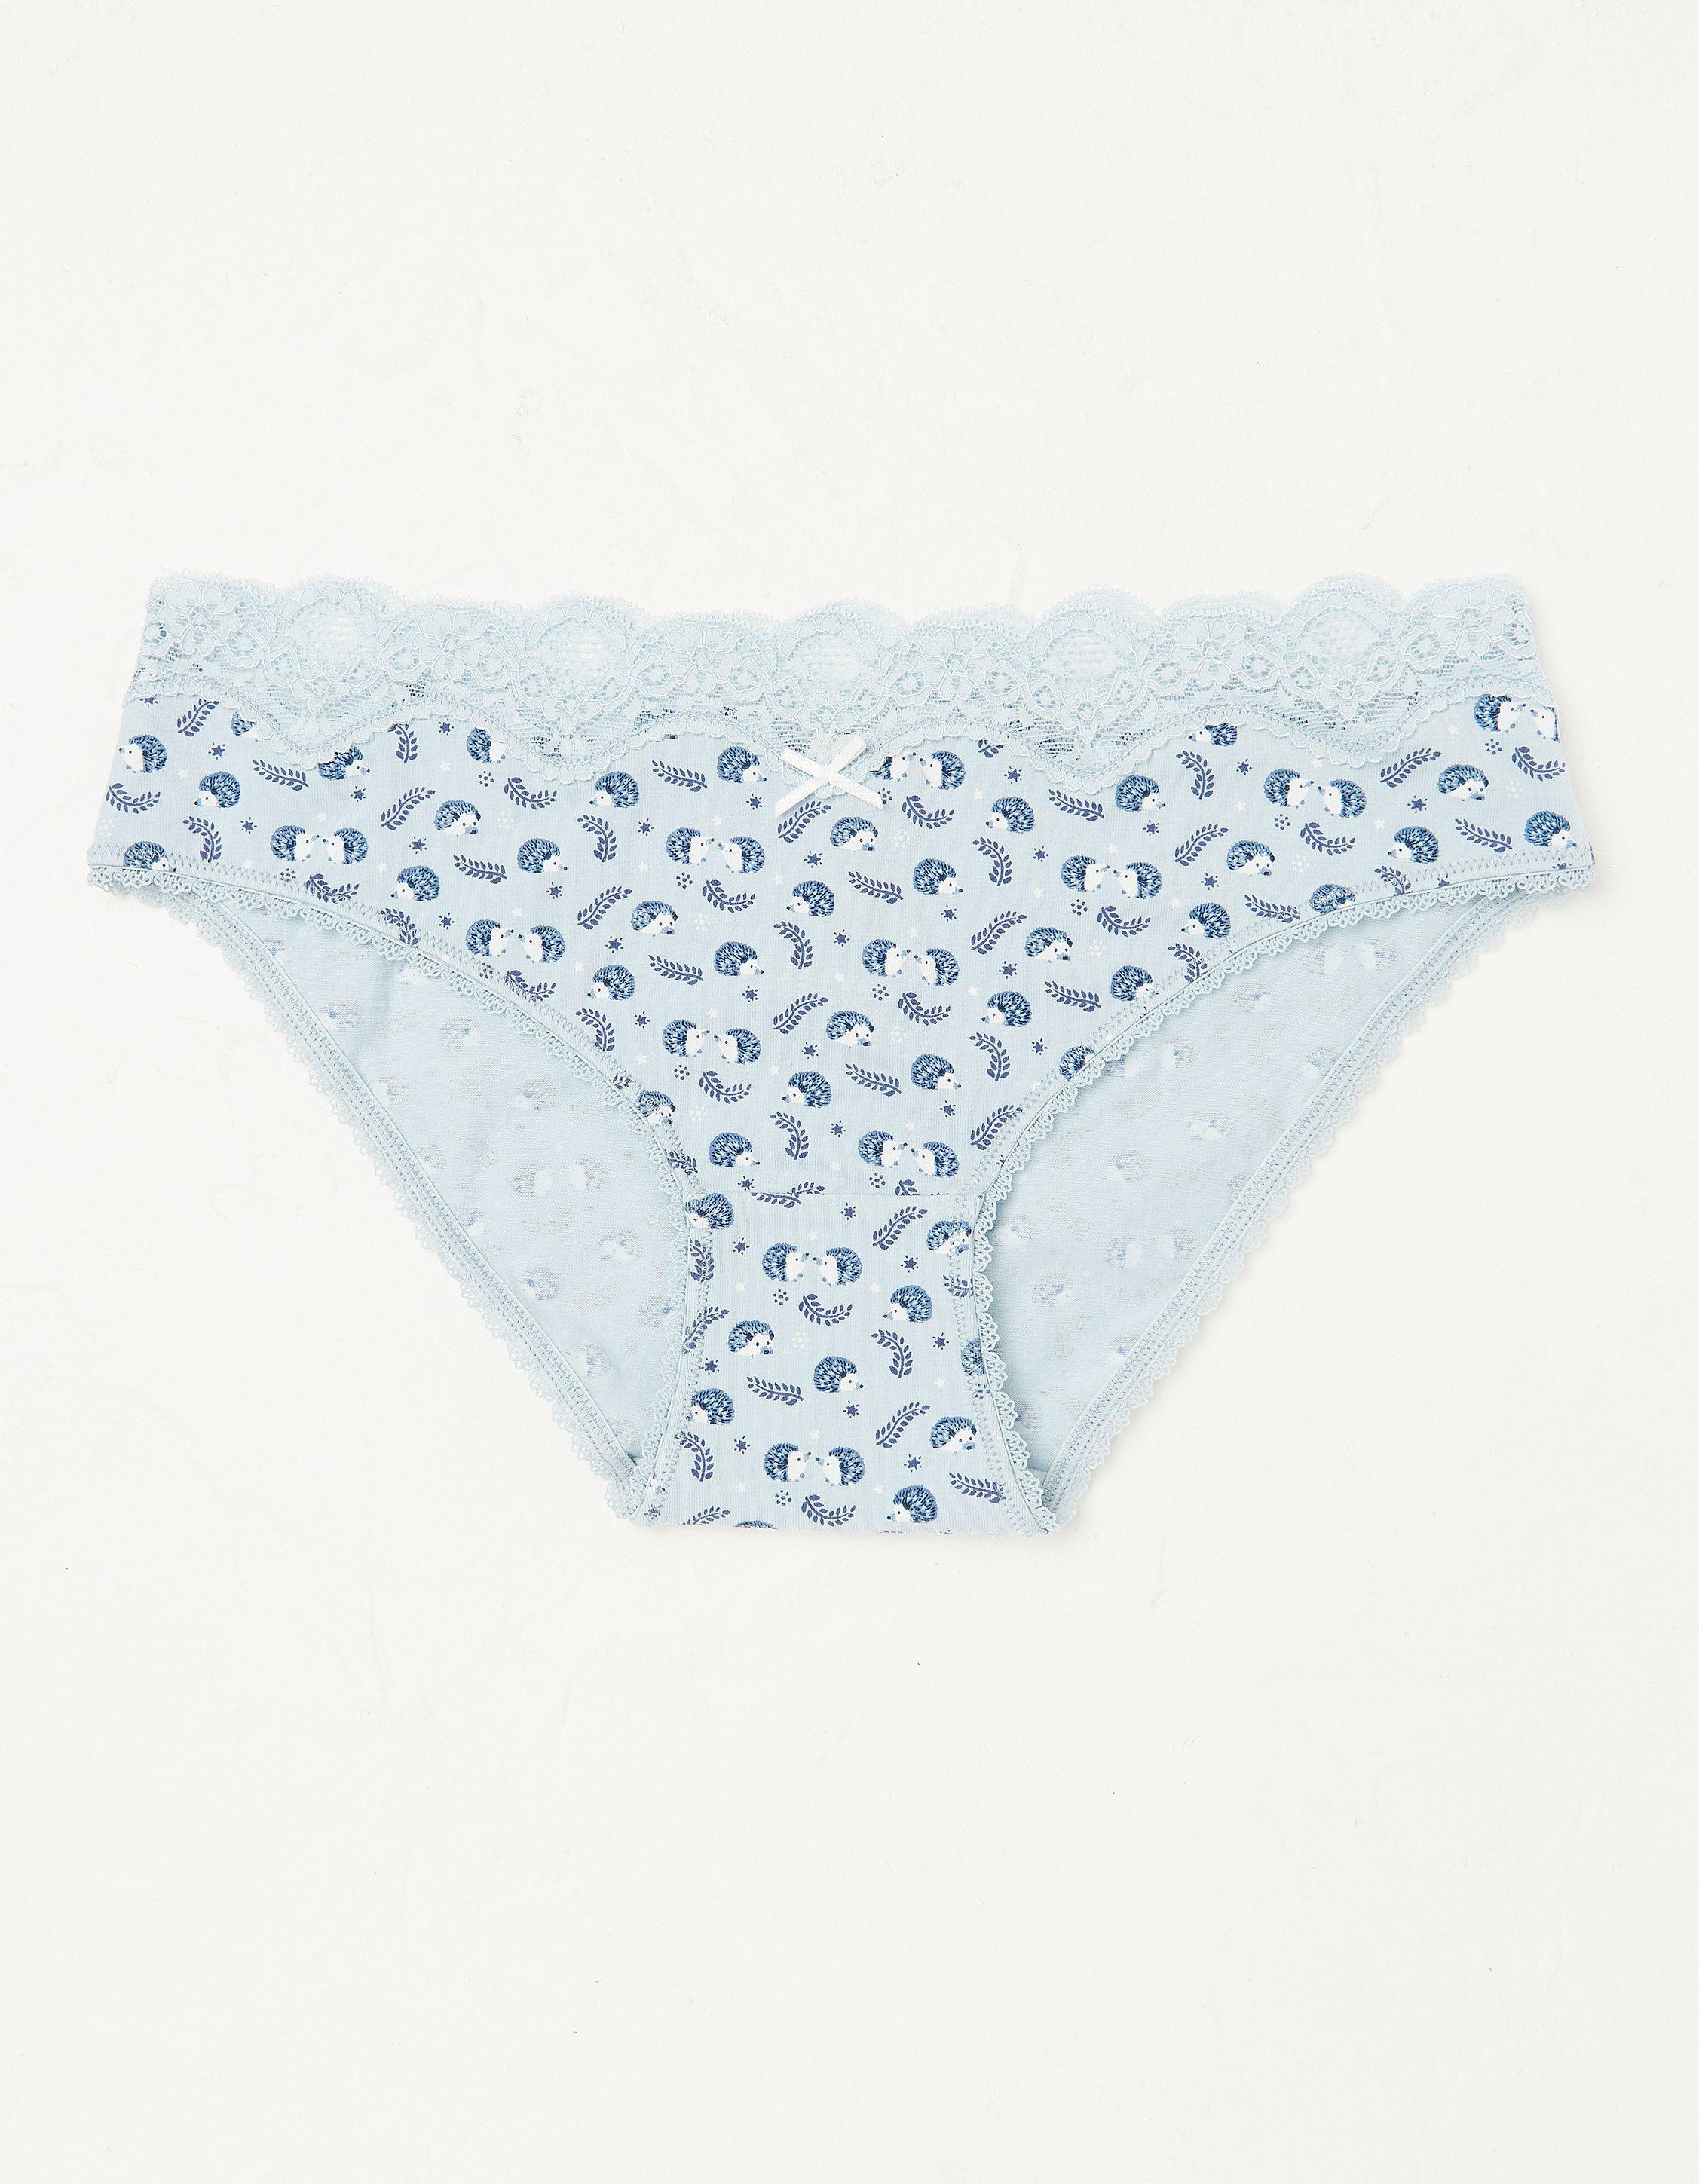 Chambray Hedgehog Lace Mini Briefs, Socks, Underwear & Tights | FatFace.com